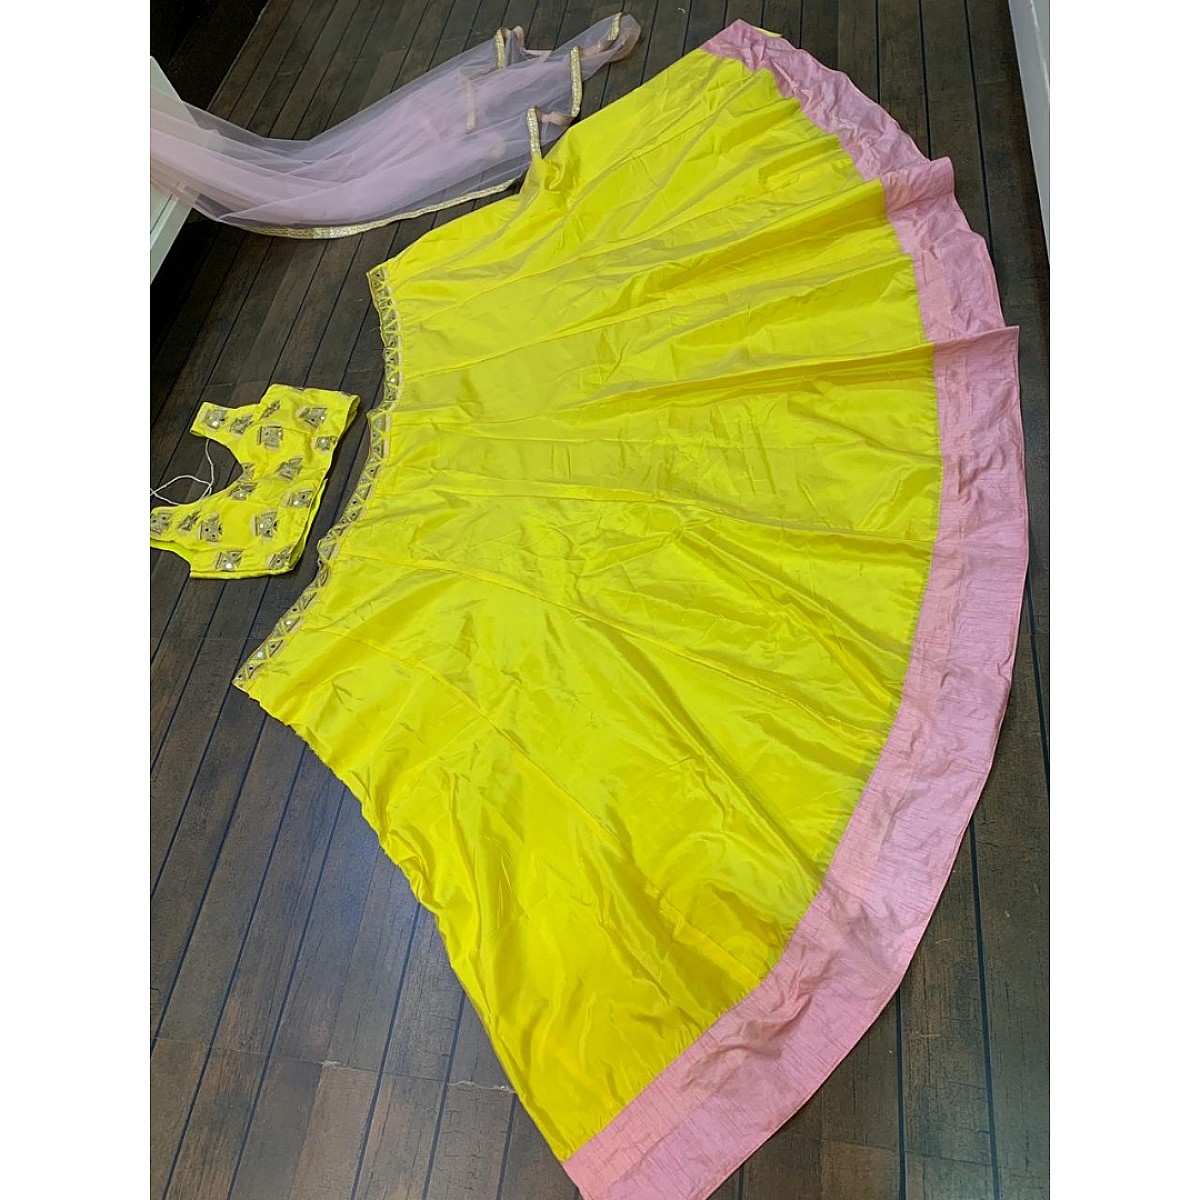 Lehenga Choli : Yellow tapeta silk mirror work festive lehenga ...